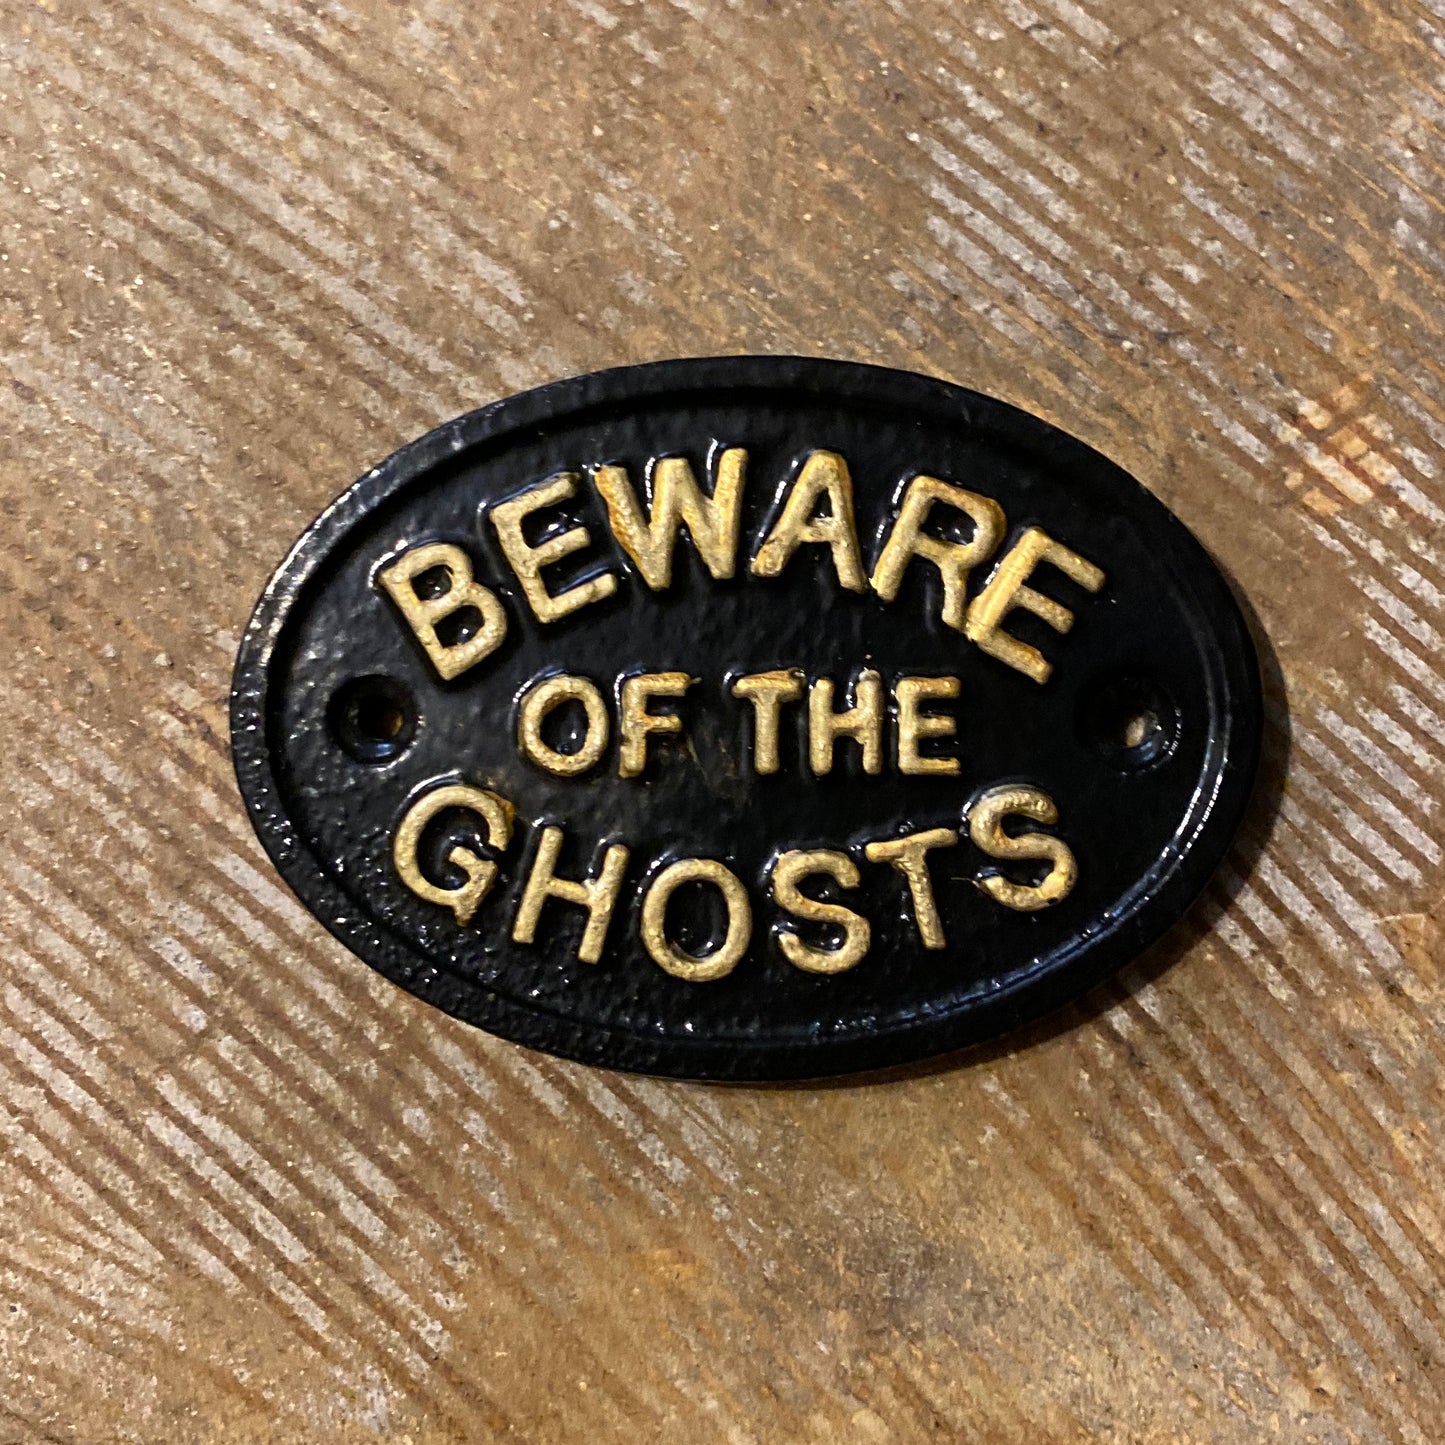 Beware of the Ghosts Plaque